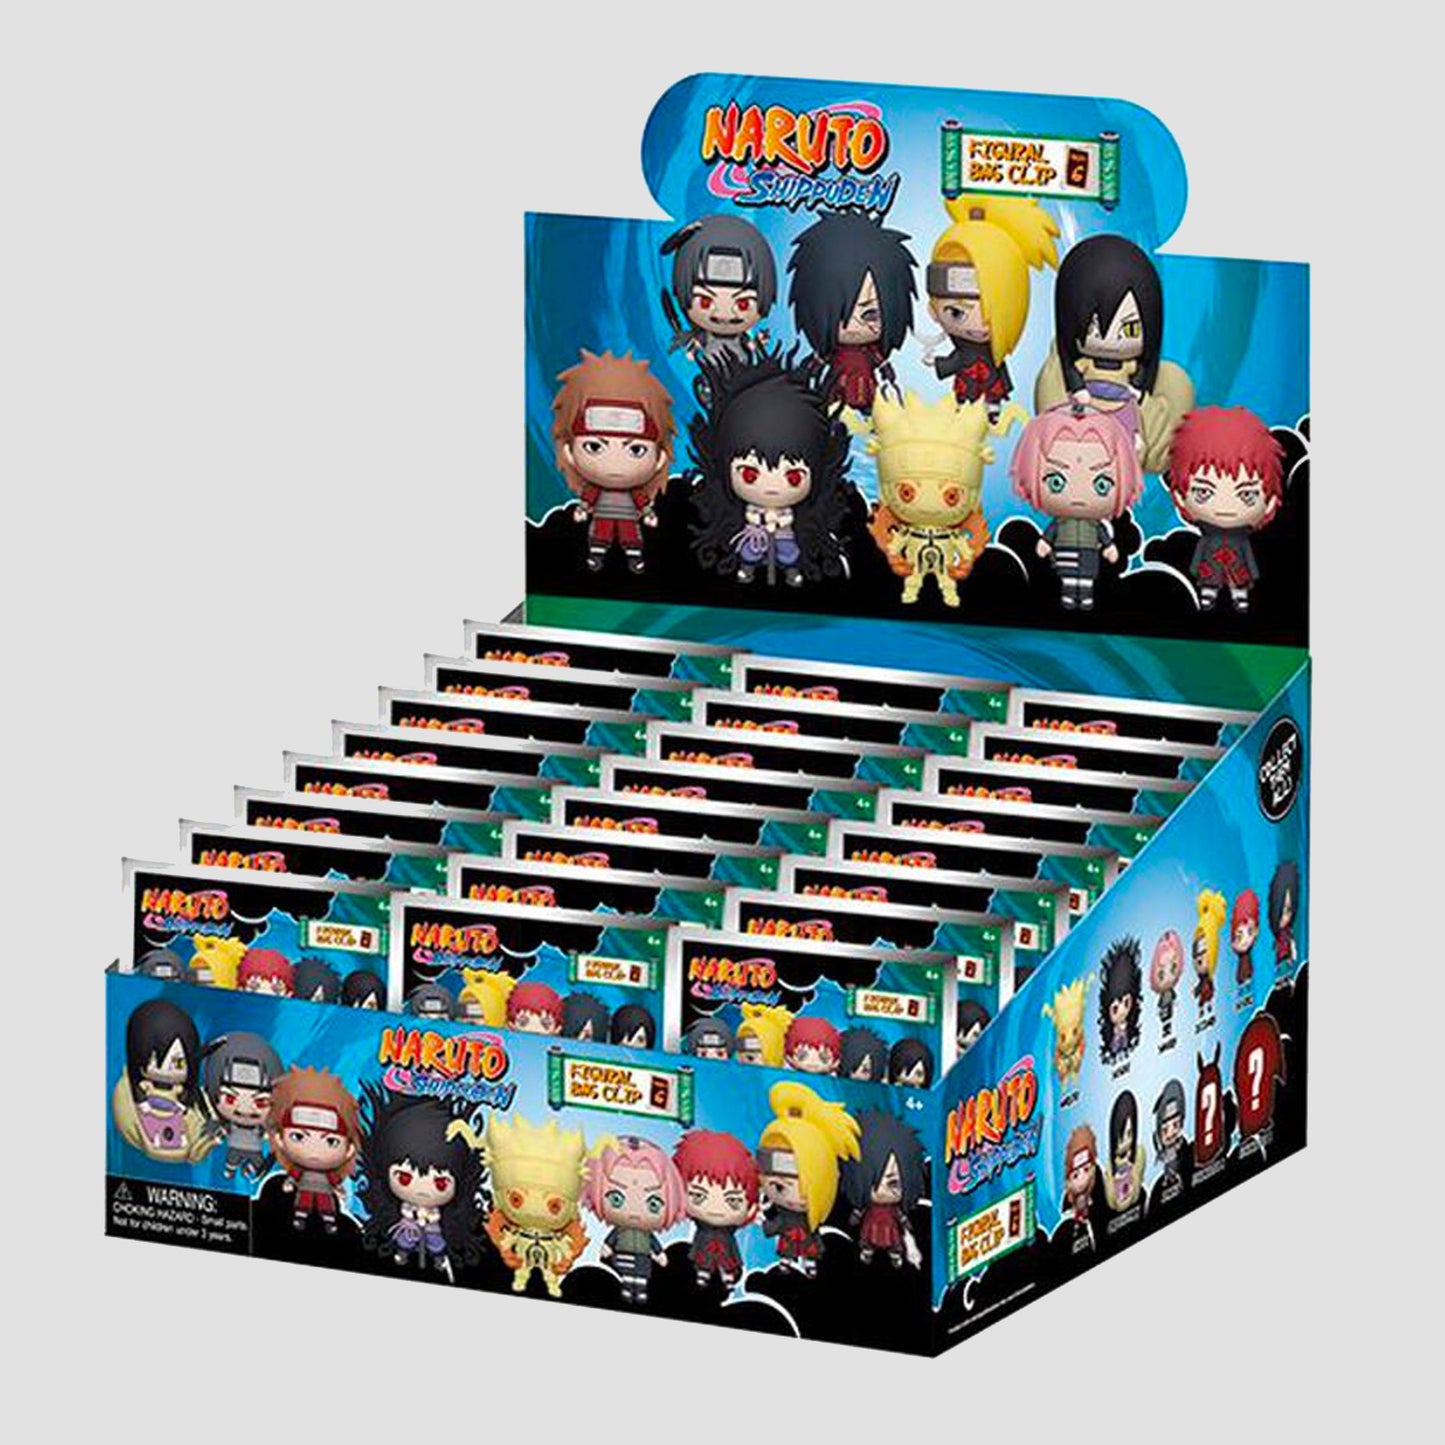 Naruto Blind Pack Figures Series 3 - Naruto Shippuden